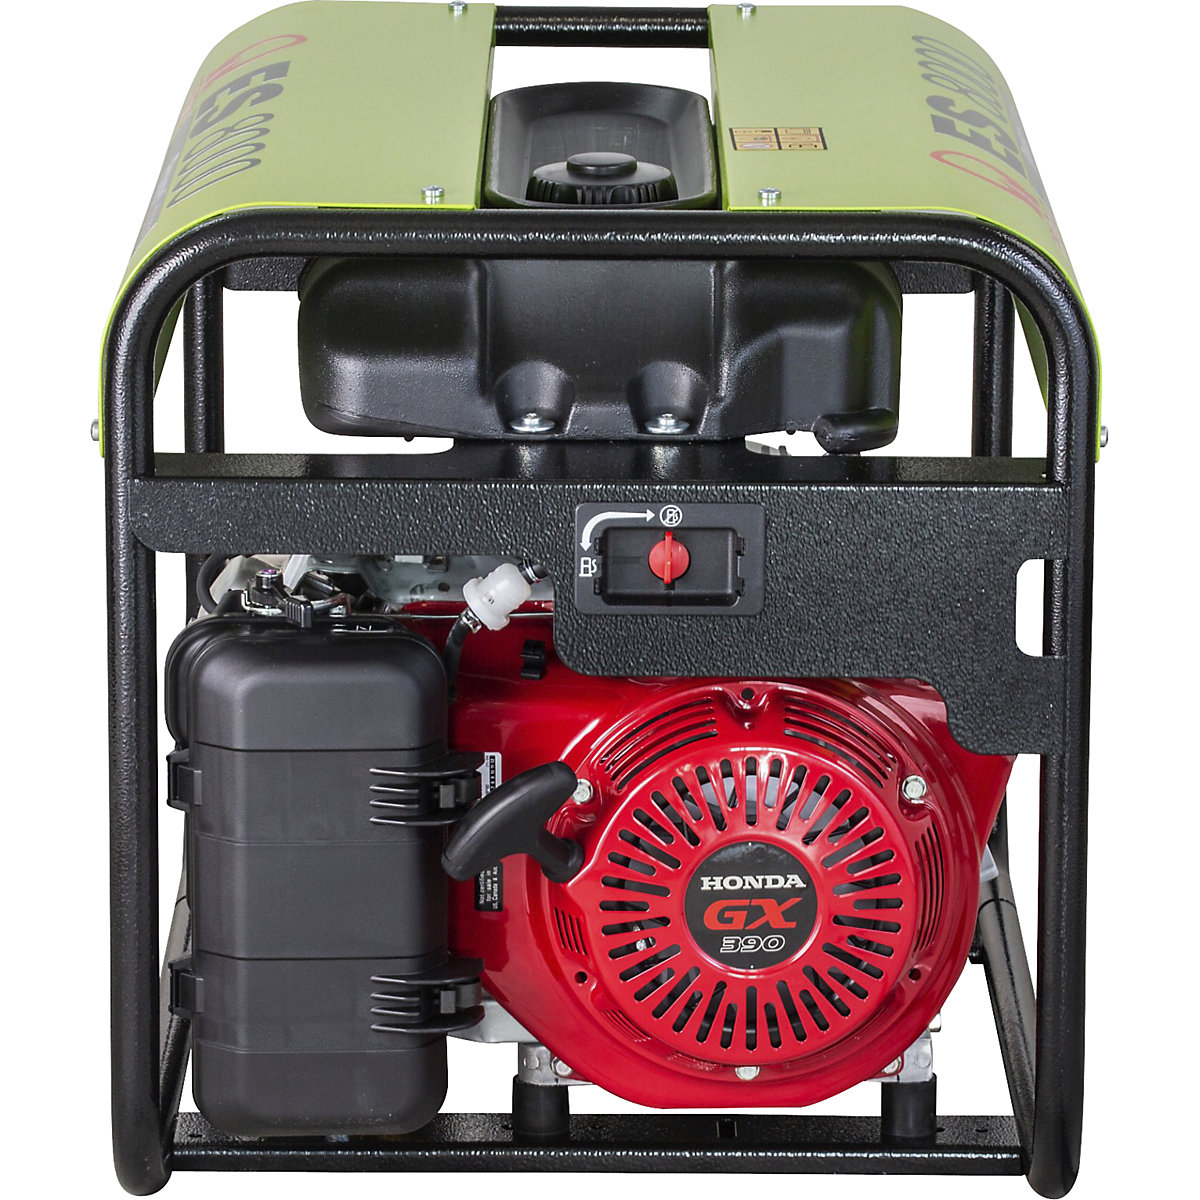 ES series power generator – petrol, 230 V – Pramac (Product illustration 3)-2